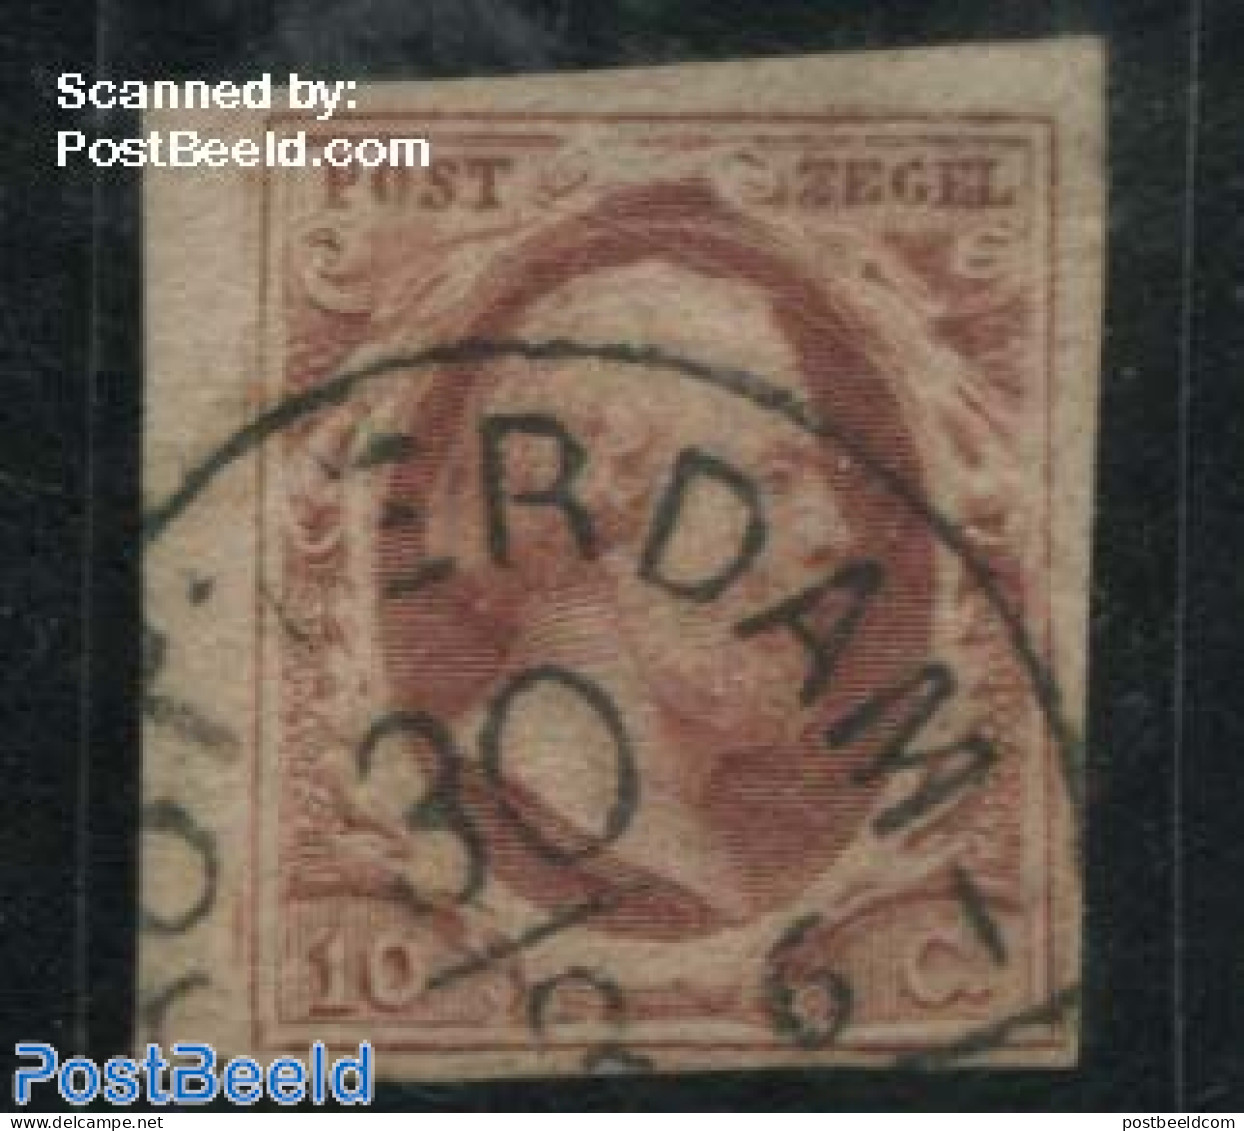 Netherlands 1852 10c, Used, ROTTERDAM-C, Used Stamps - Gebruikt